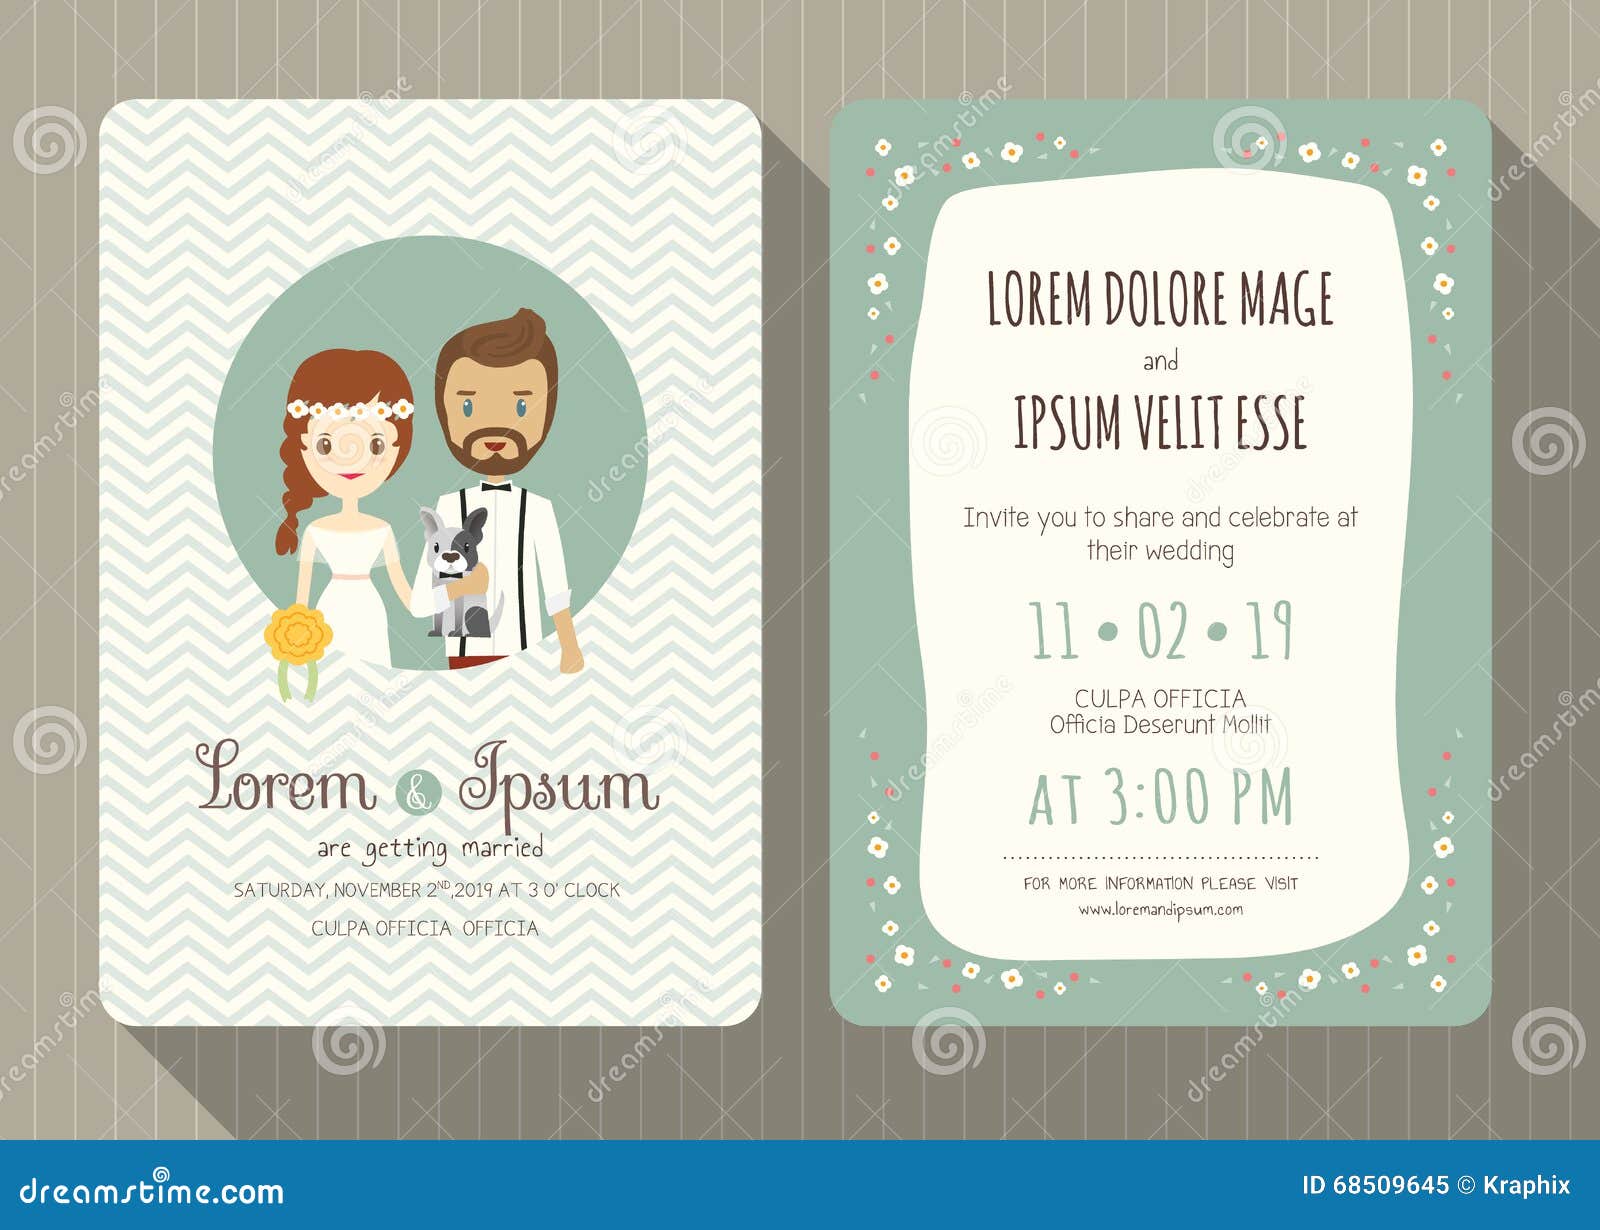 Wedding Invitation Card With Cute Groom And Bride Cartoon Illustration  68509645 - Megapixl